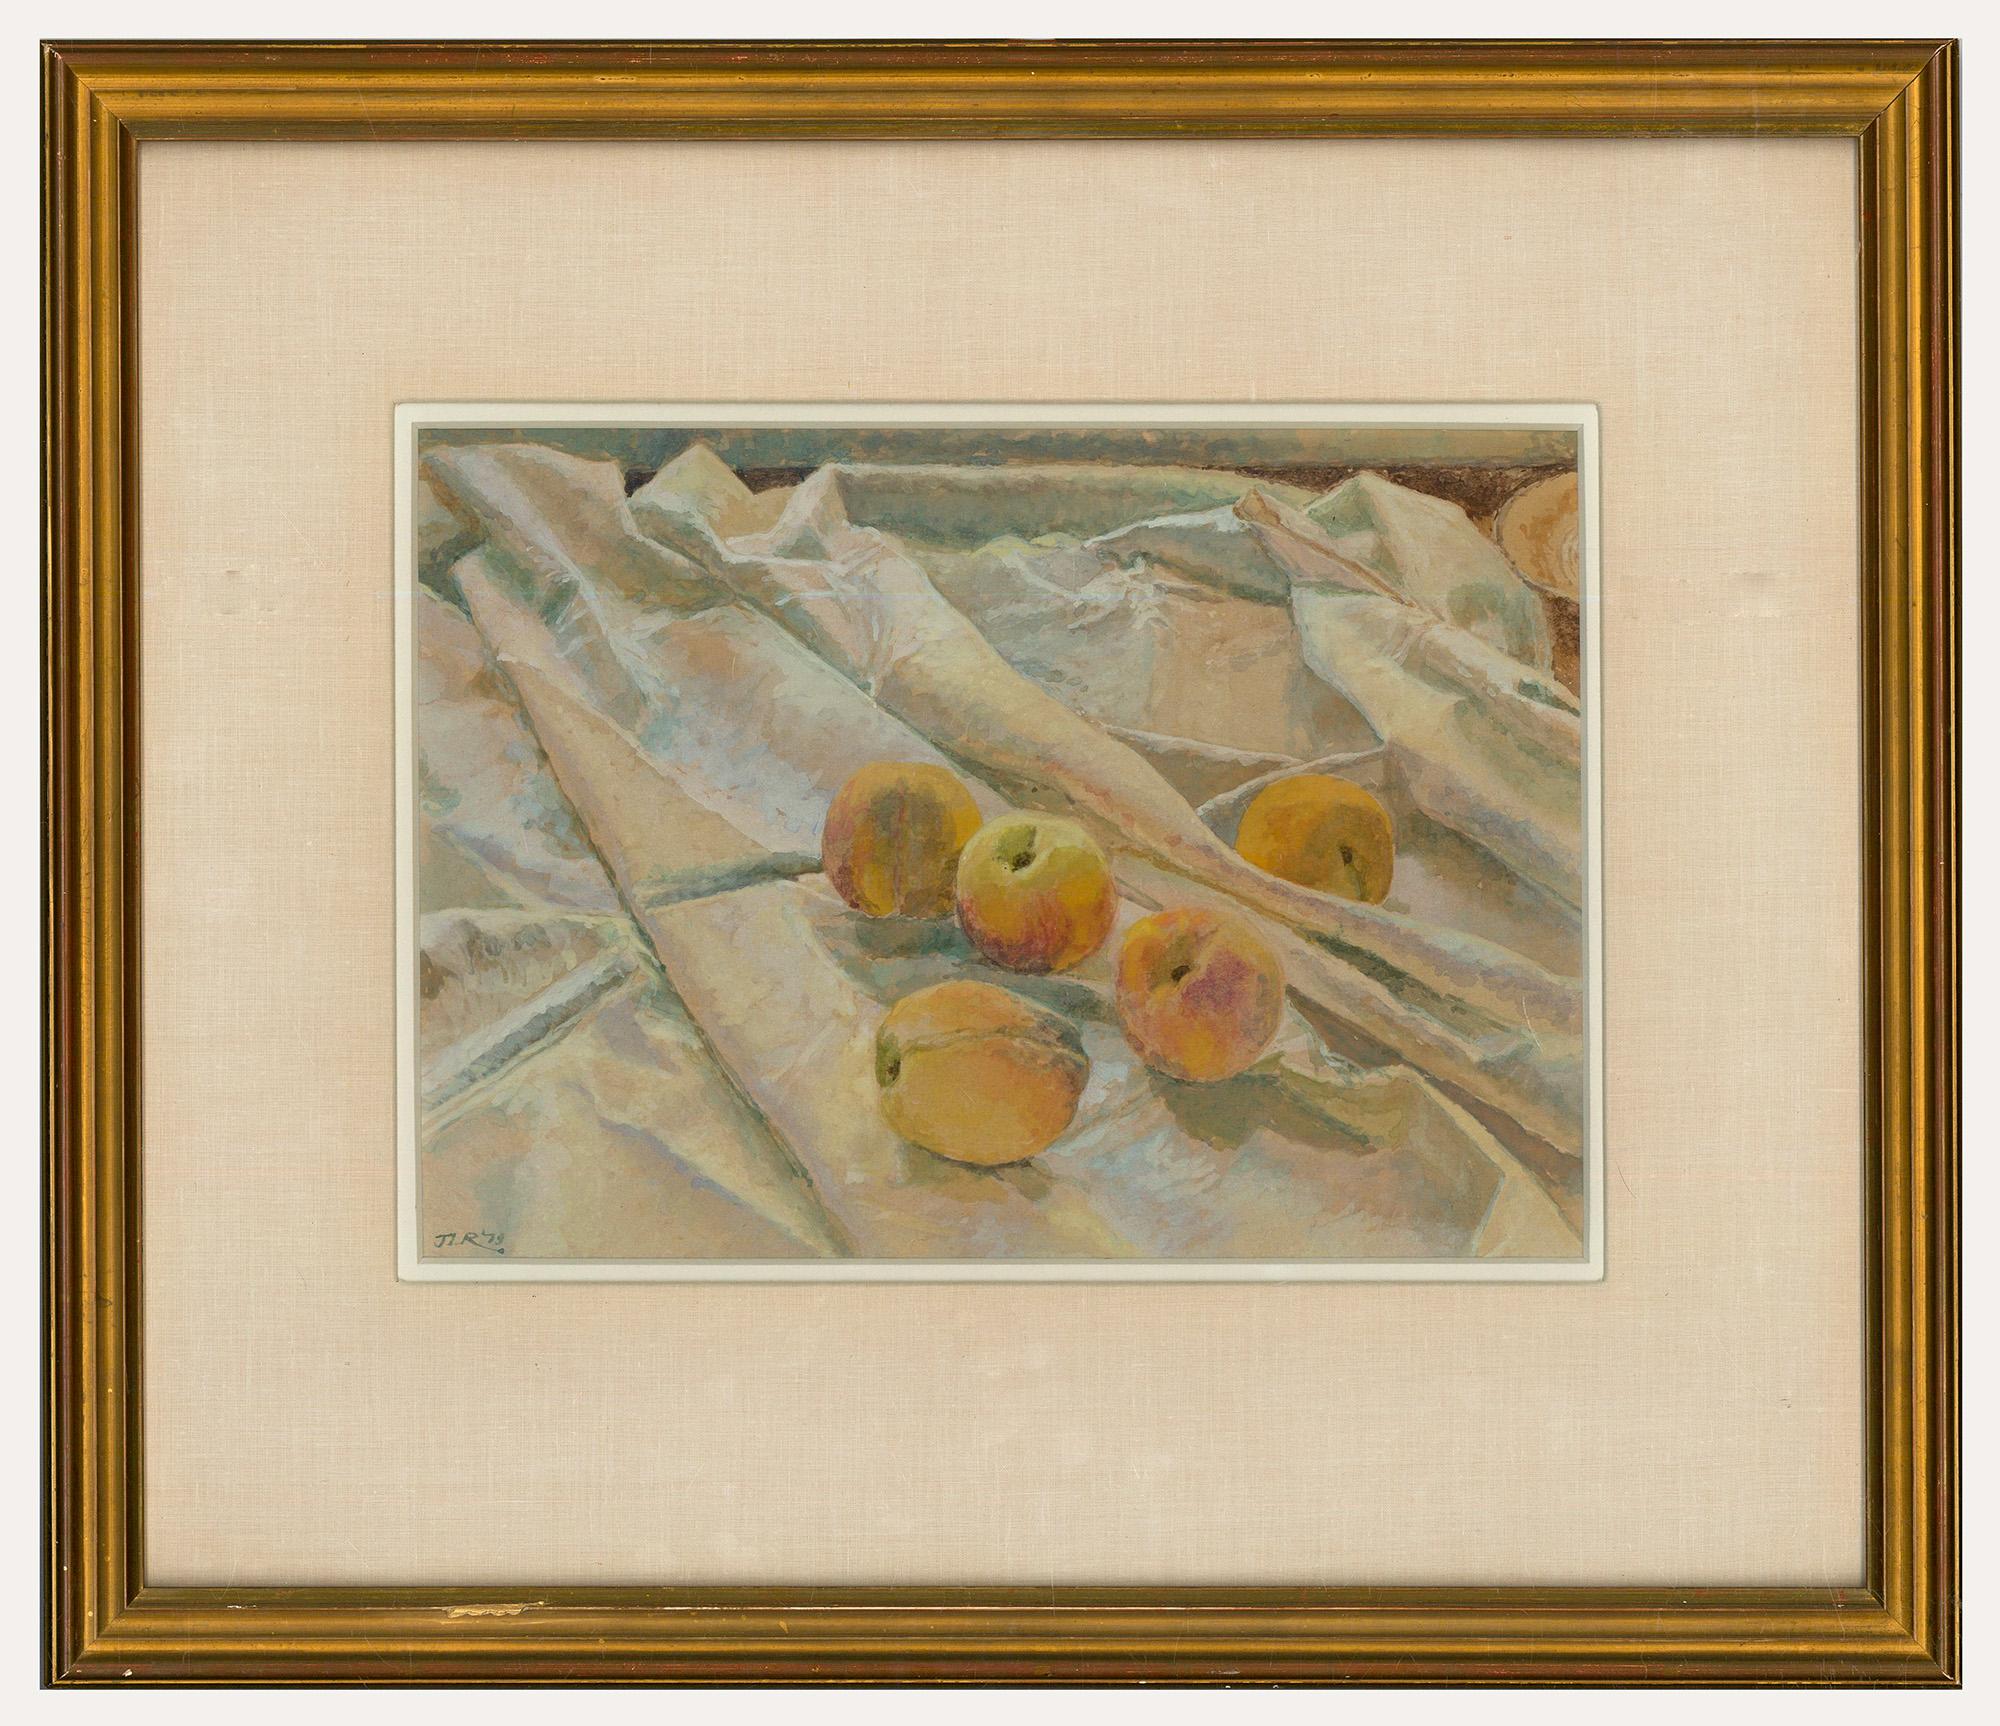 Jacquline Rizvi HNEAC RBA RWS Still-Life - Jacqueline Rizvi HNEAC RBA RWS (b.1944) - Watercolour, Peaches on White Cloth